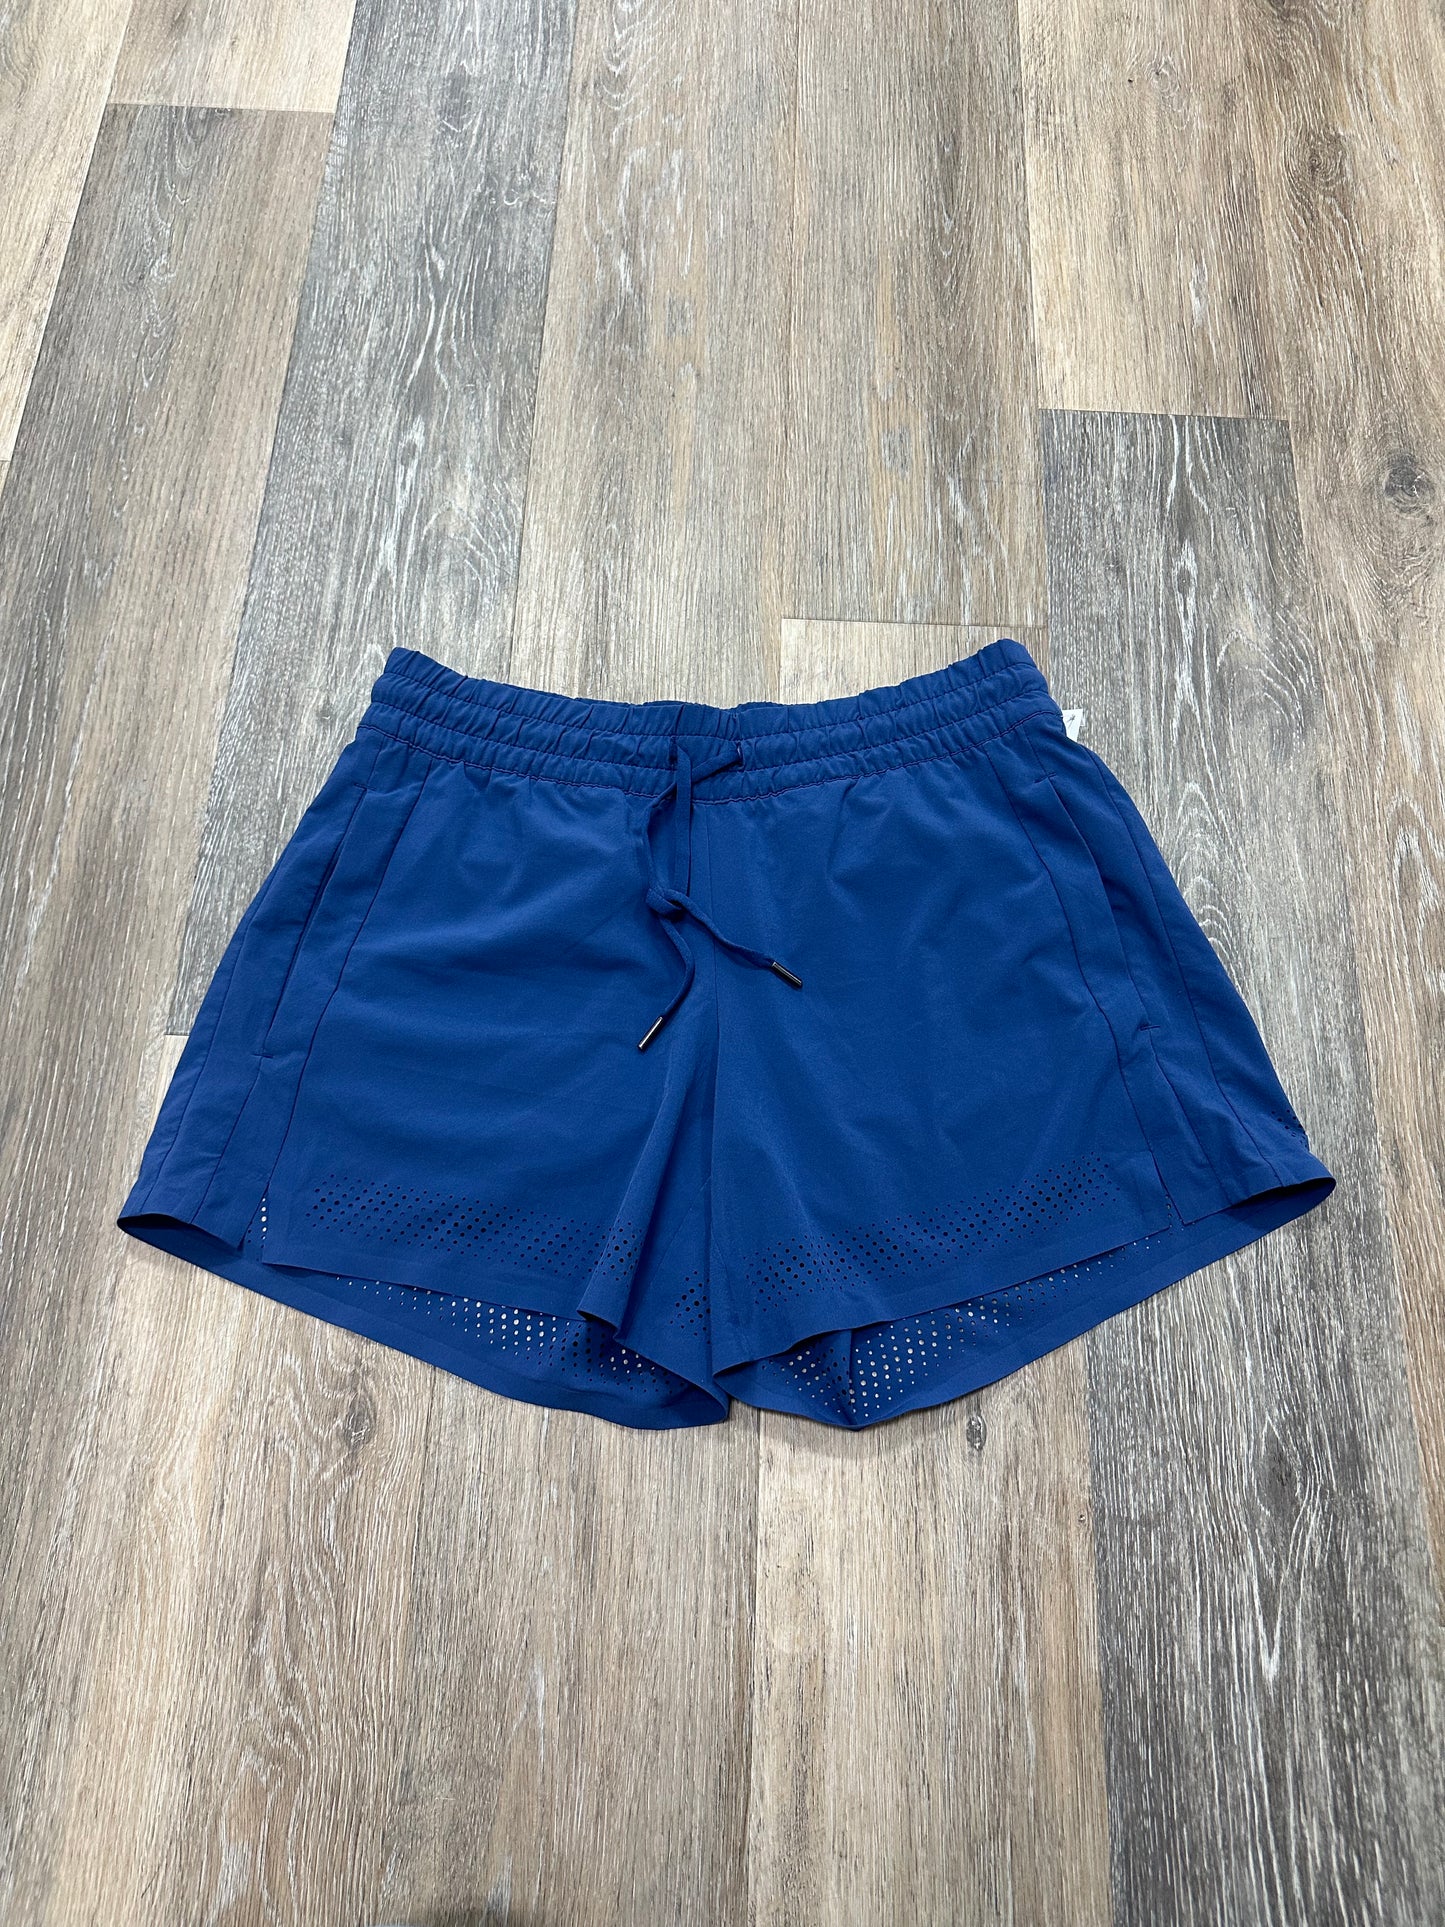 Athletic Shorts By Athleta  Size: 4